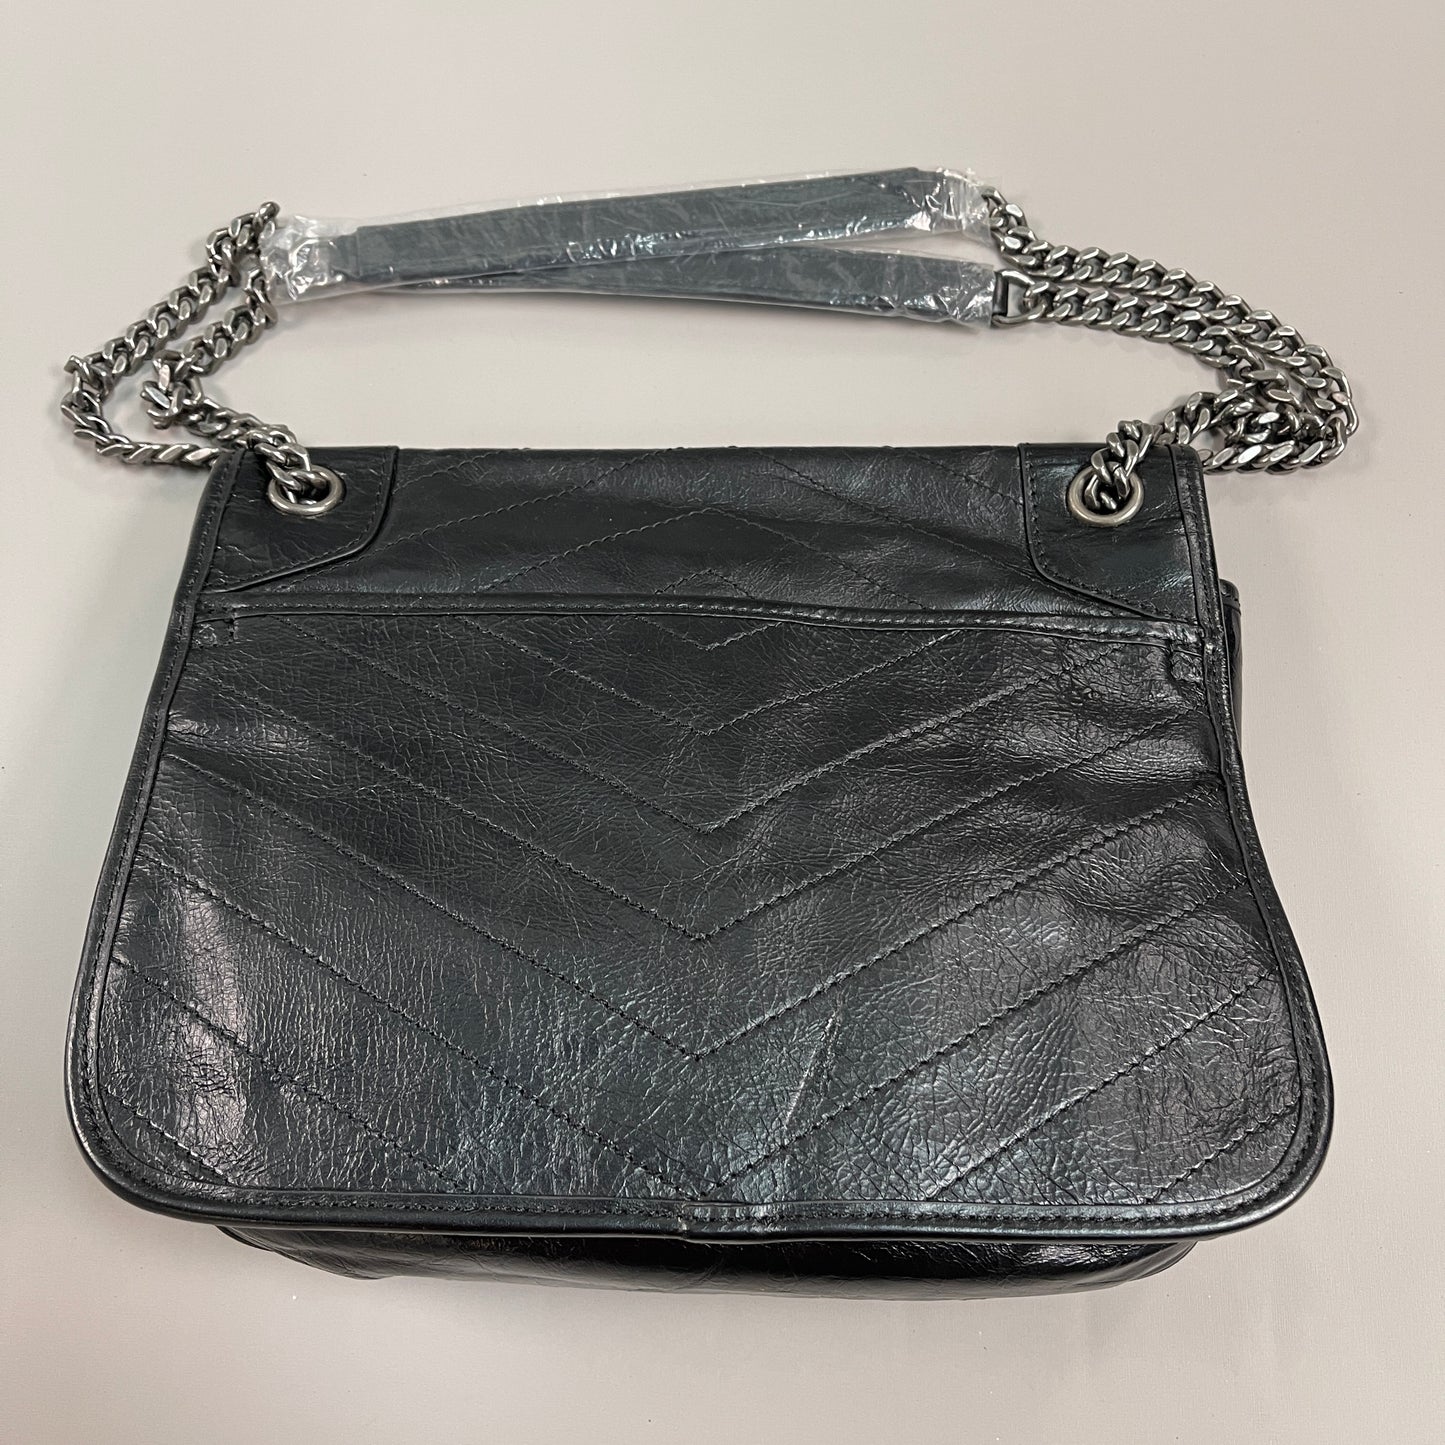 PLUM QUEEN Classic Genuine Leather Handbag Women's Sz S Black (New)